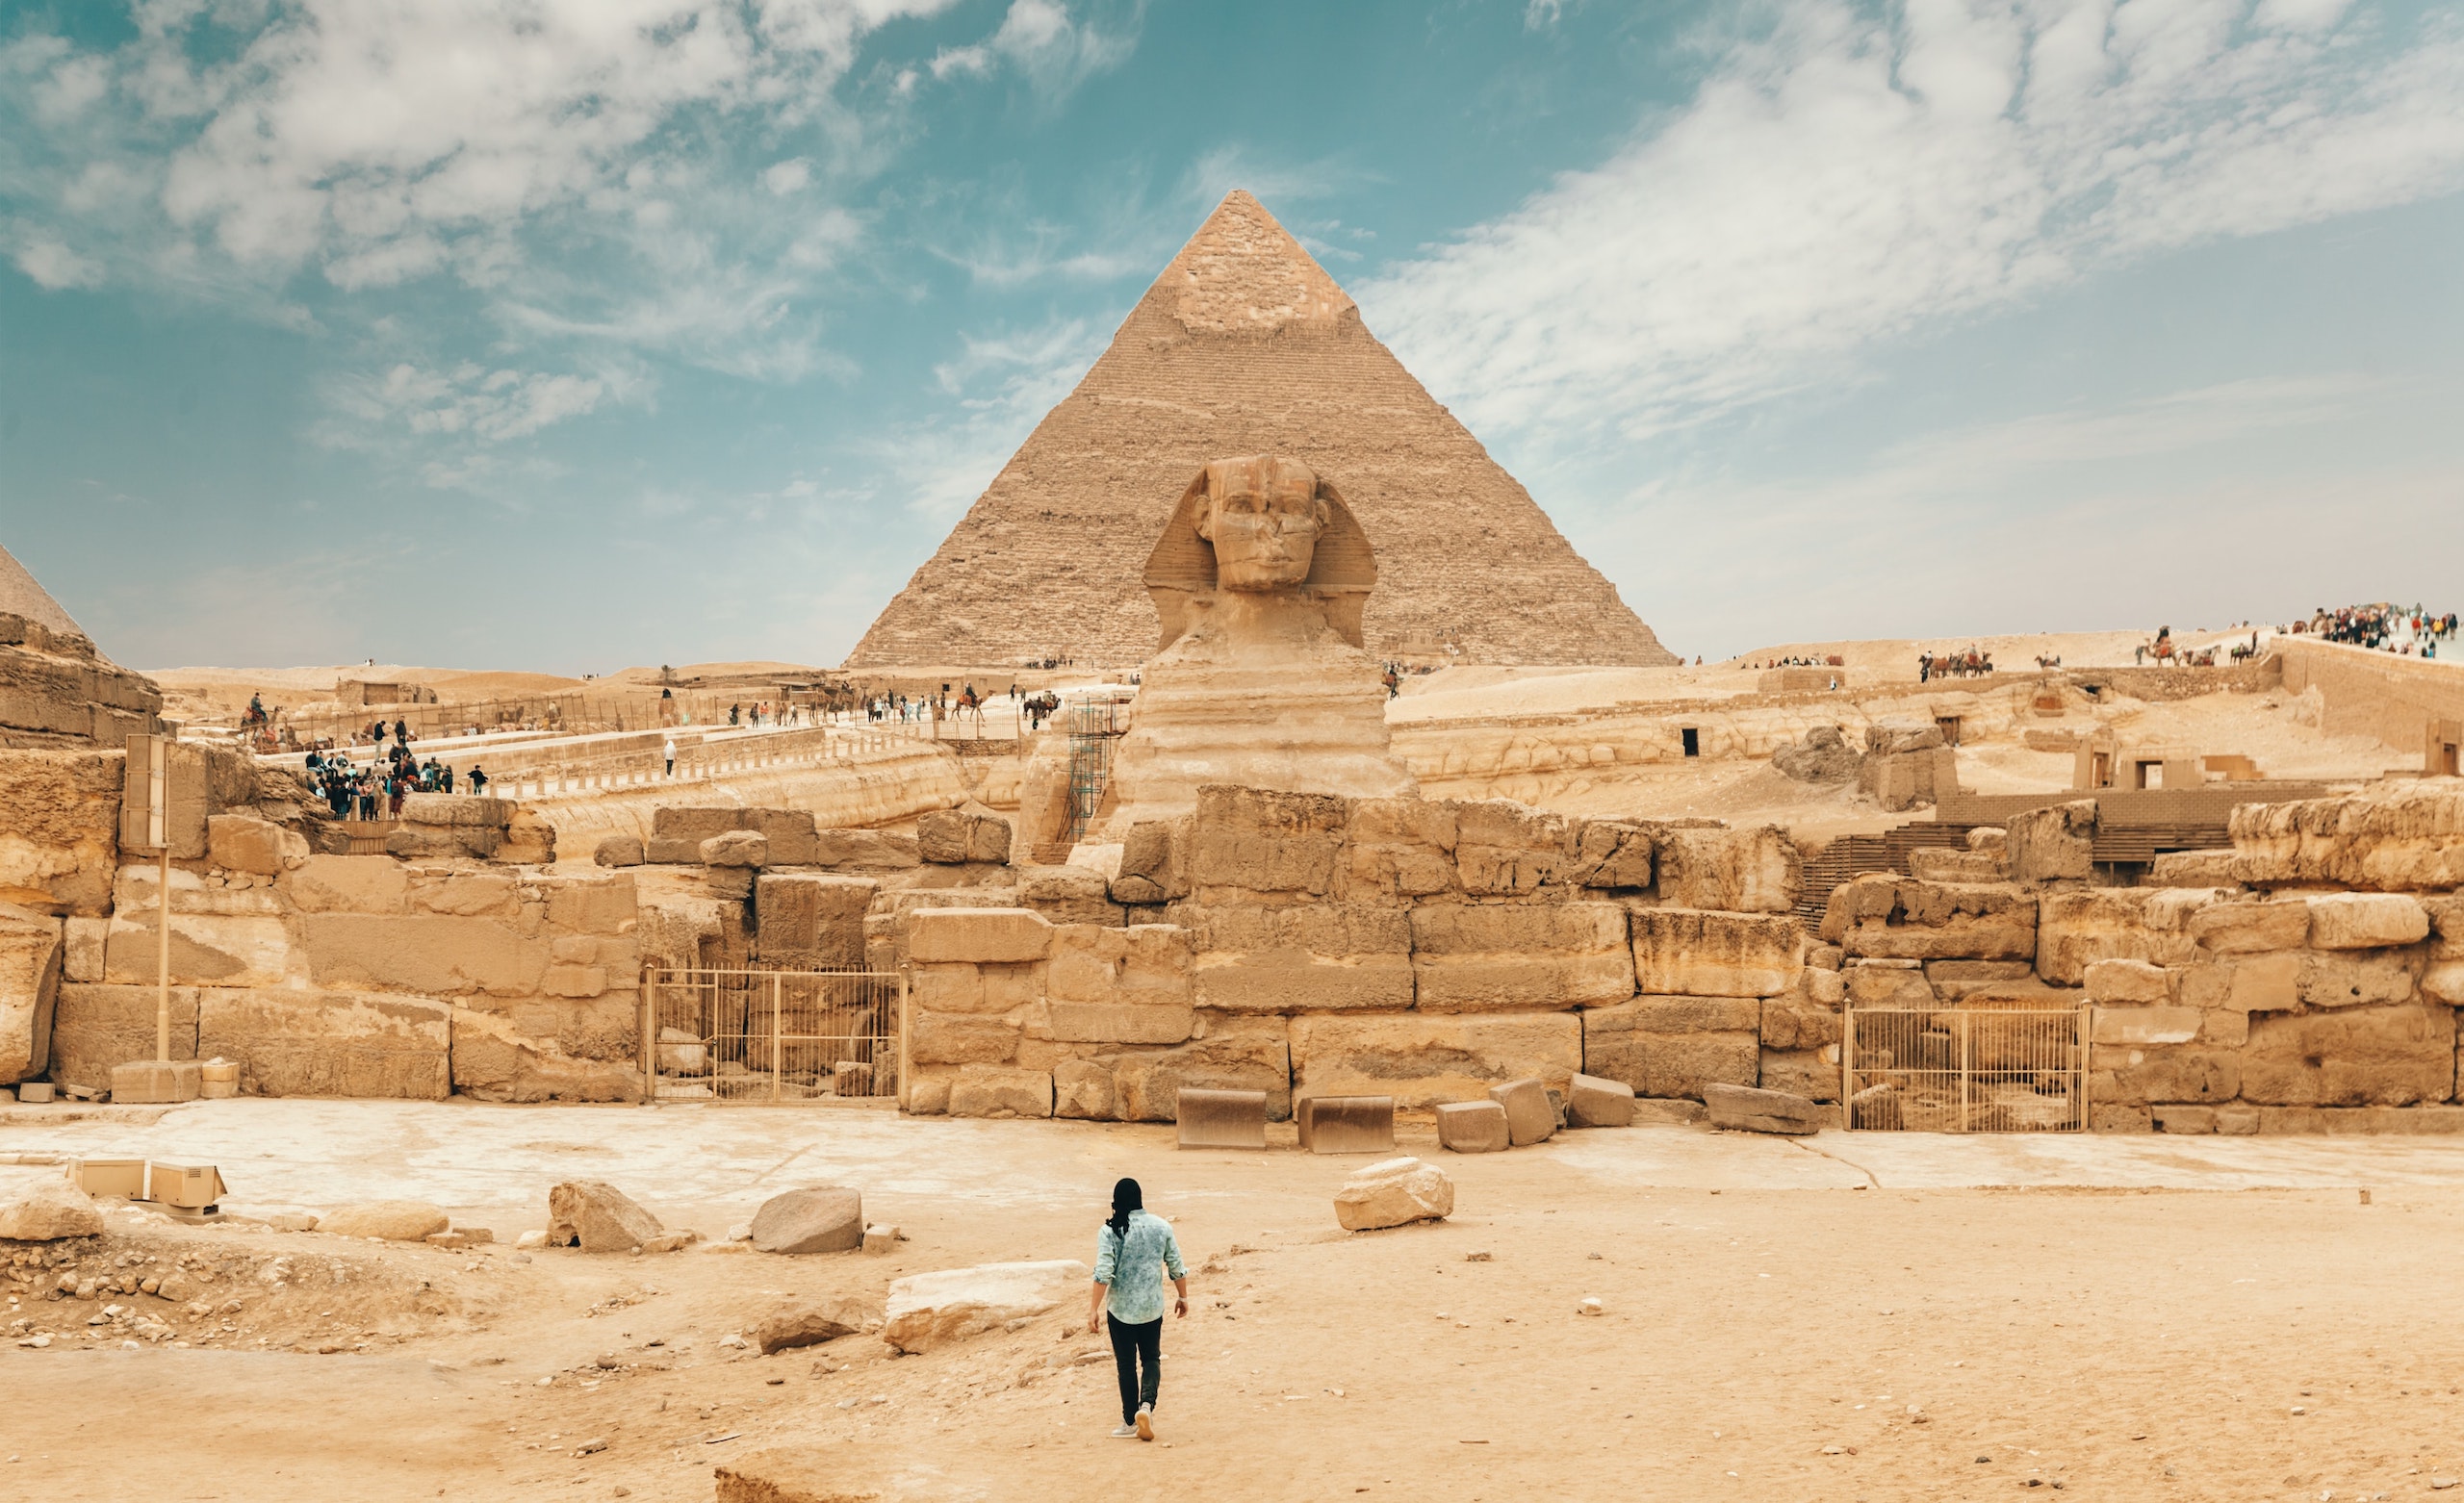   The Pyramids & The Nile River